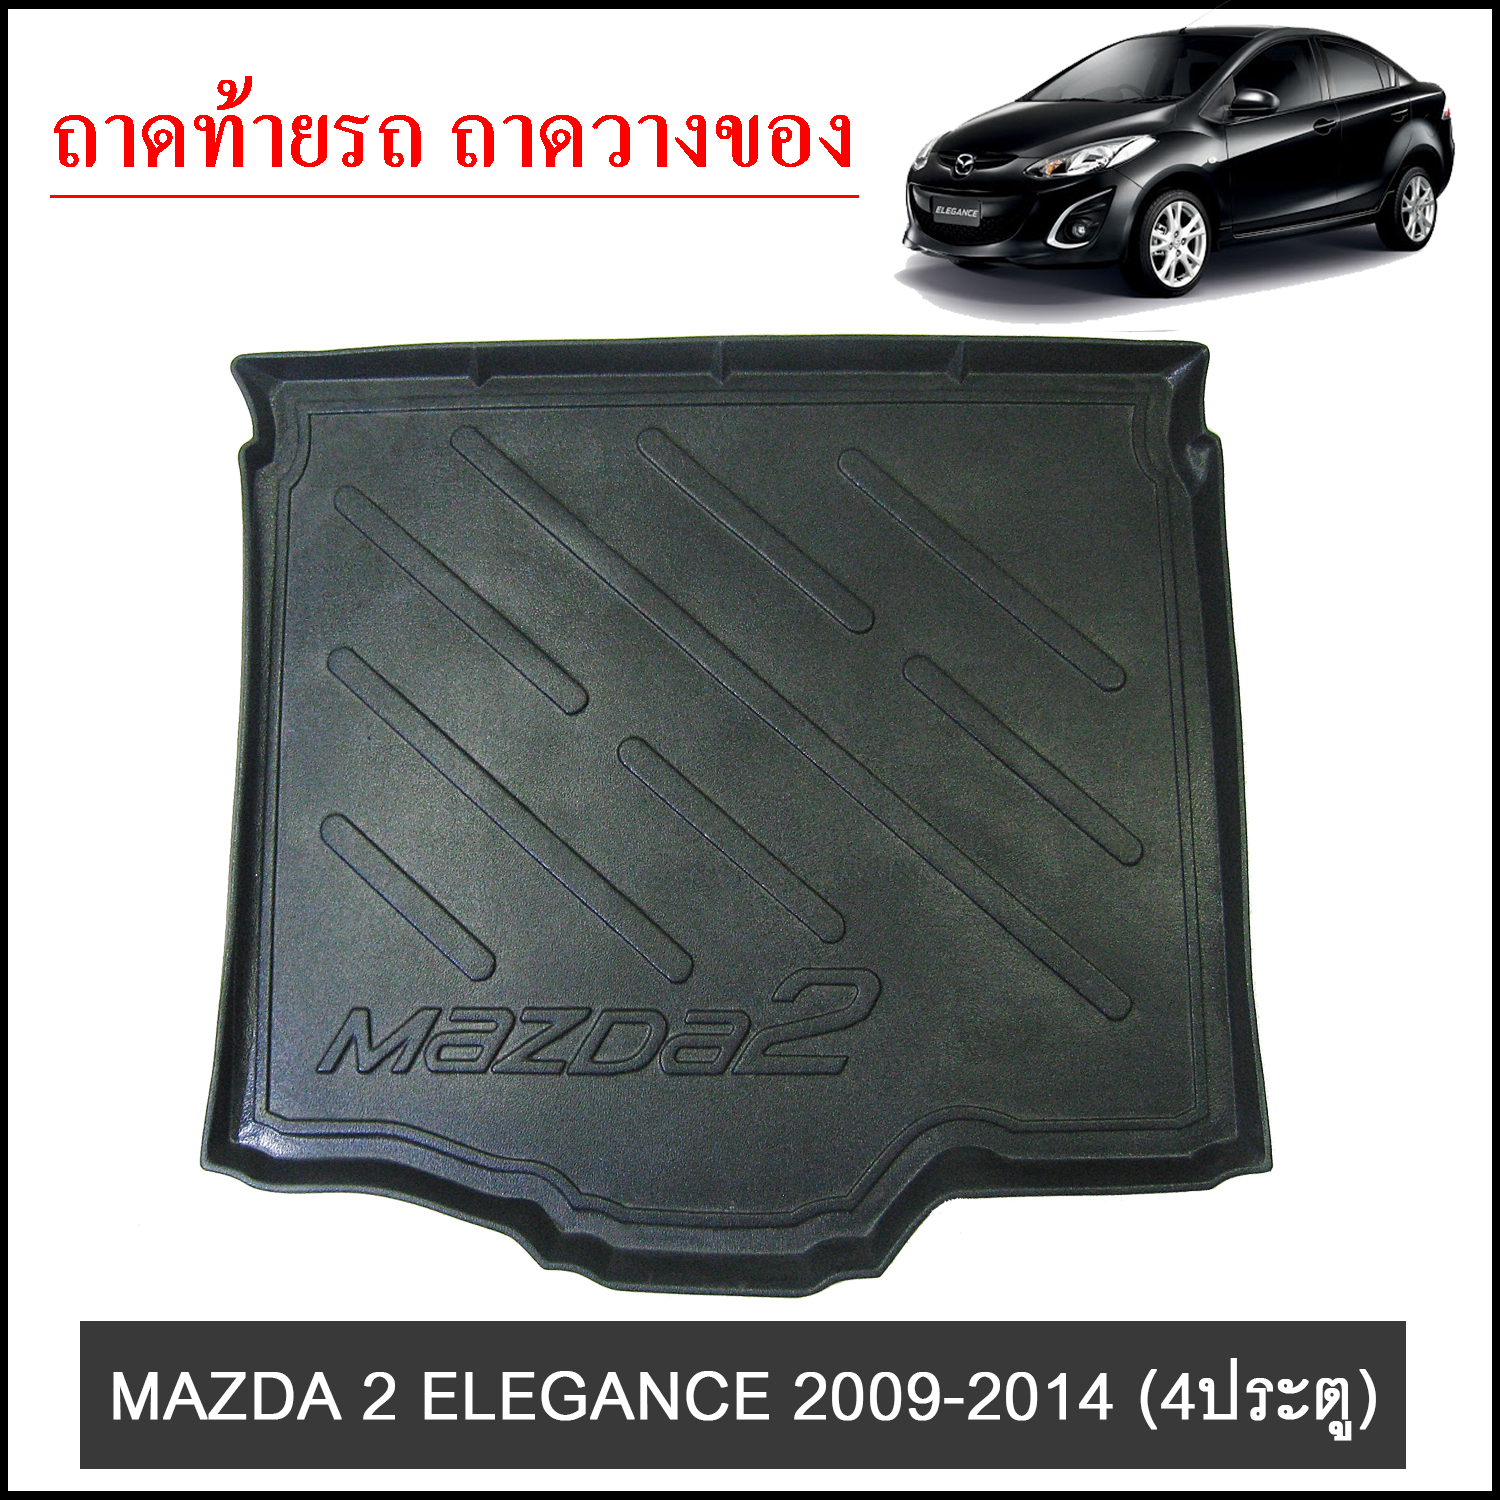 MAZDA 2 Elegance 2009-2014